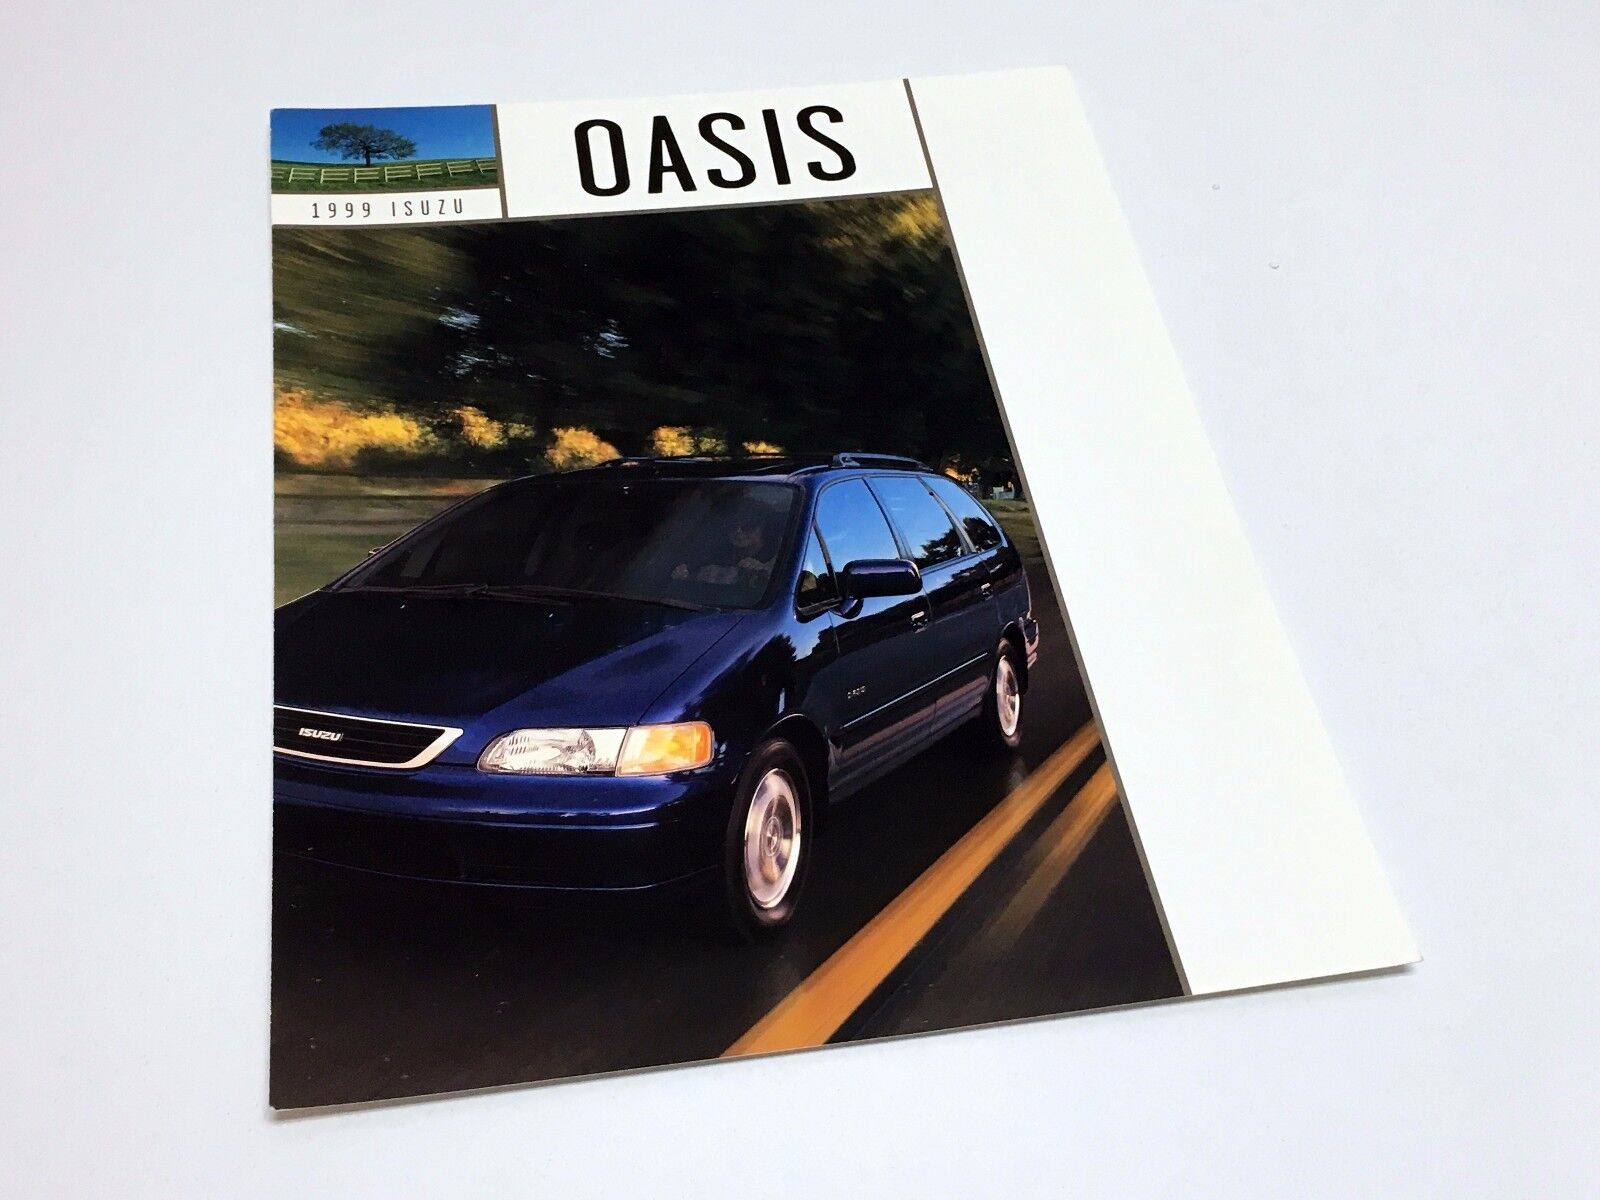 1999 Isuzu Oasis Information Sheet Brochure | eBay